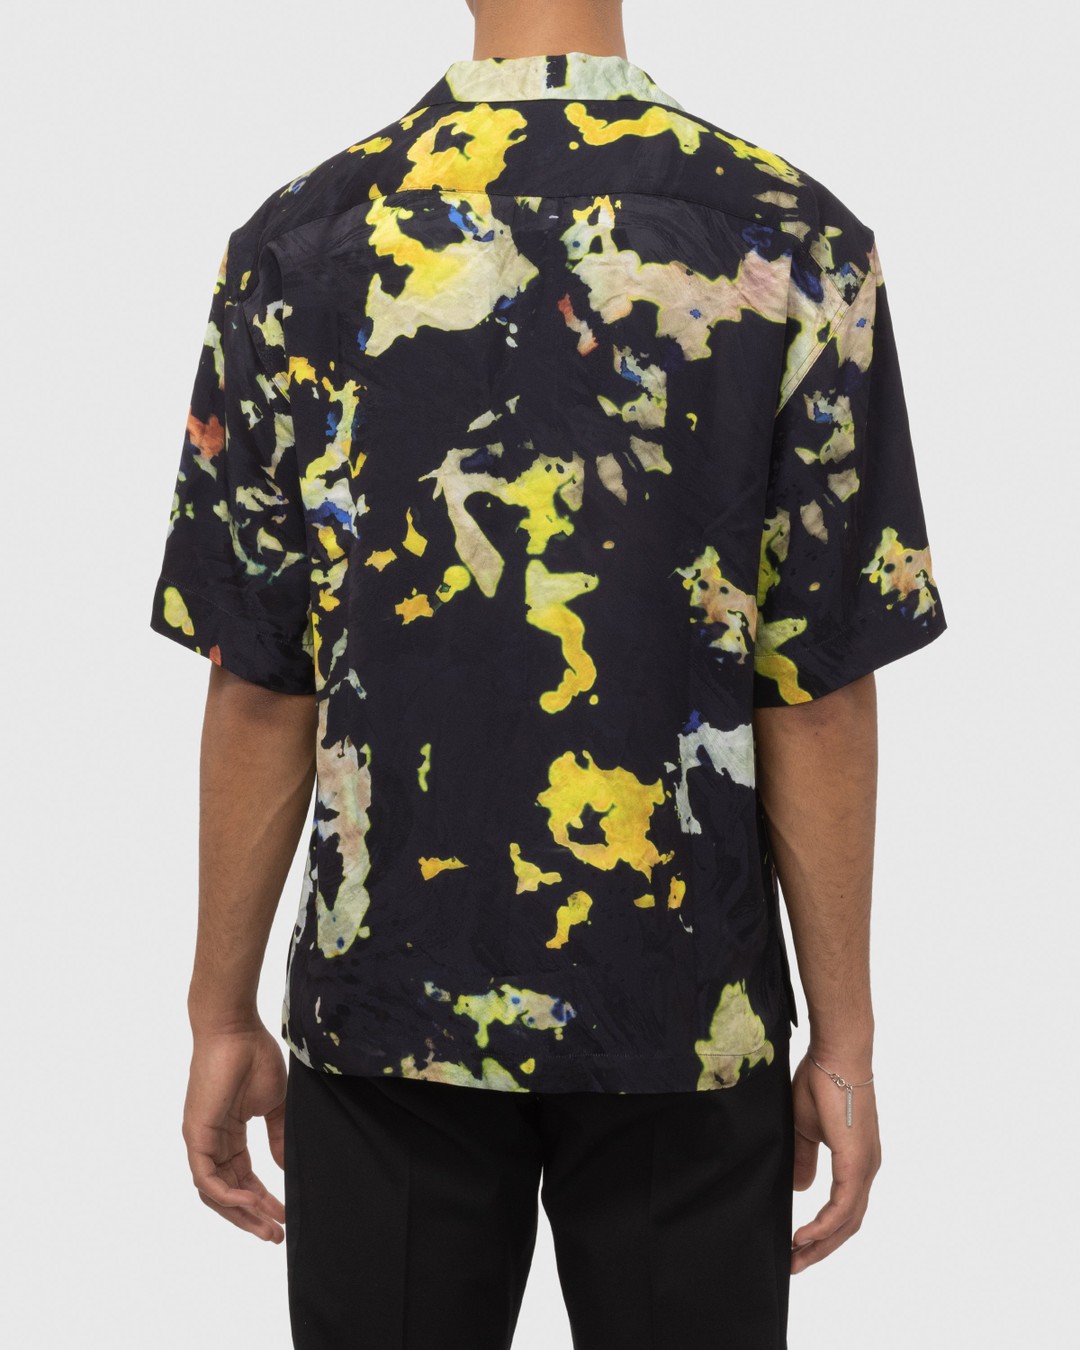 Dries van Noten – Jacquard Cassi Shirt Multi - Shortsleeve Shirts - Multi - Image 3